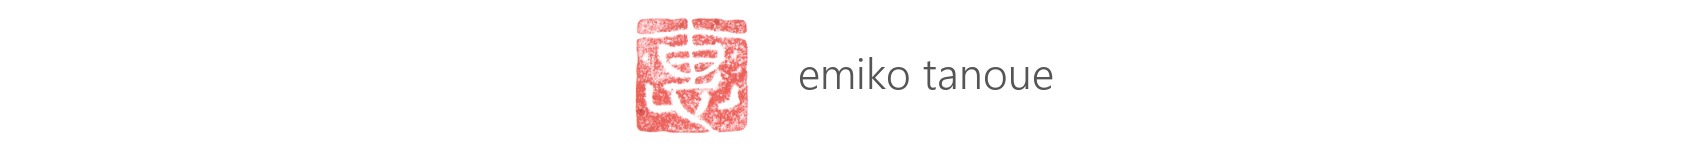 Emiko Tanoue Gallery Shop